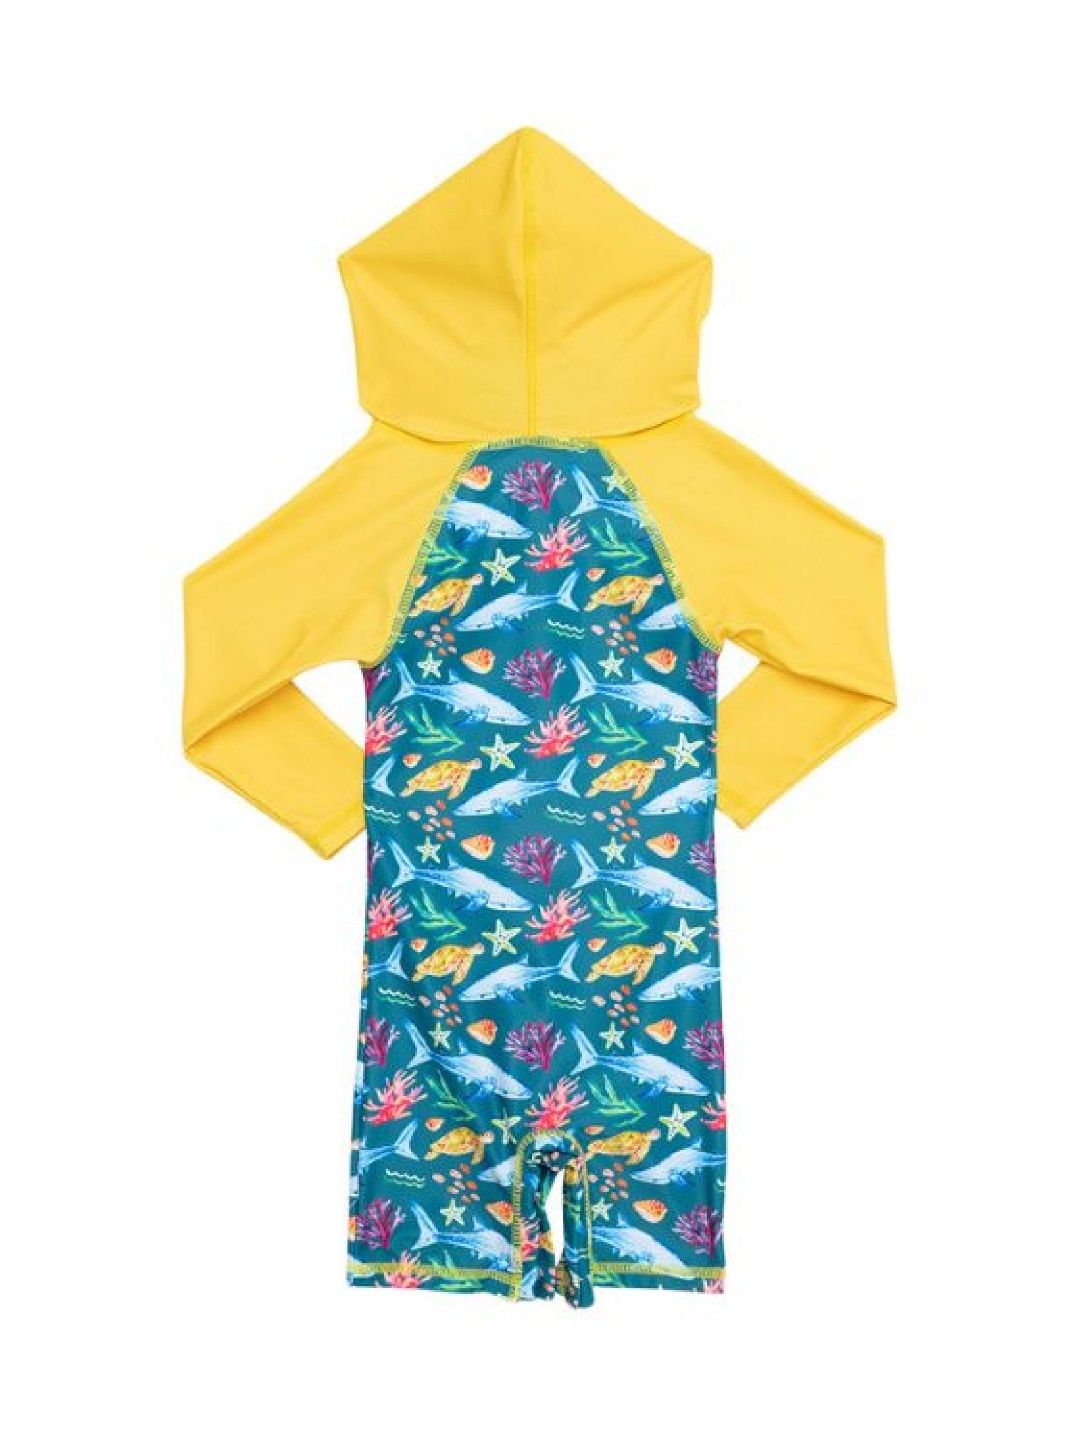 bean fashion Anina Rubio Panglao Baby Boy Hooded Swimsuit (Multicolor- Image 3)